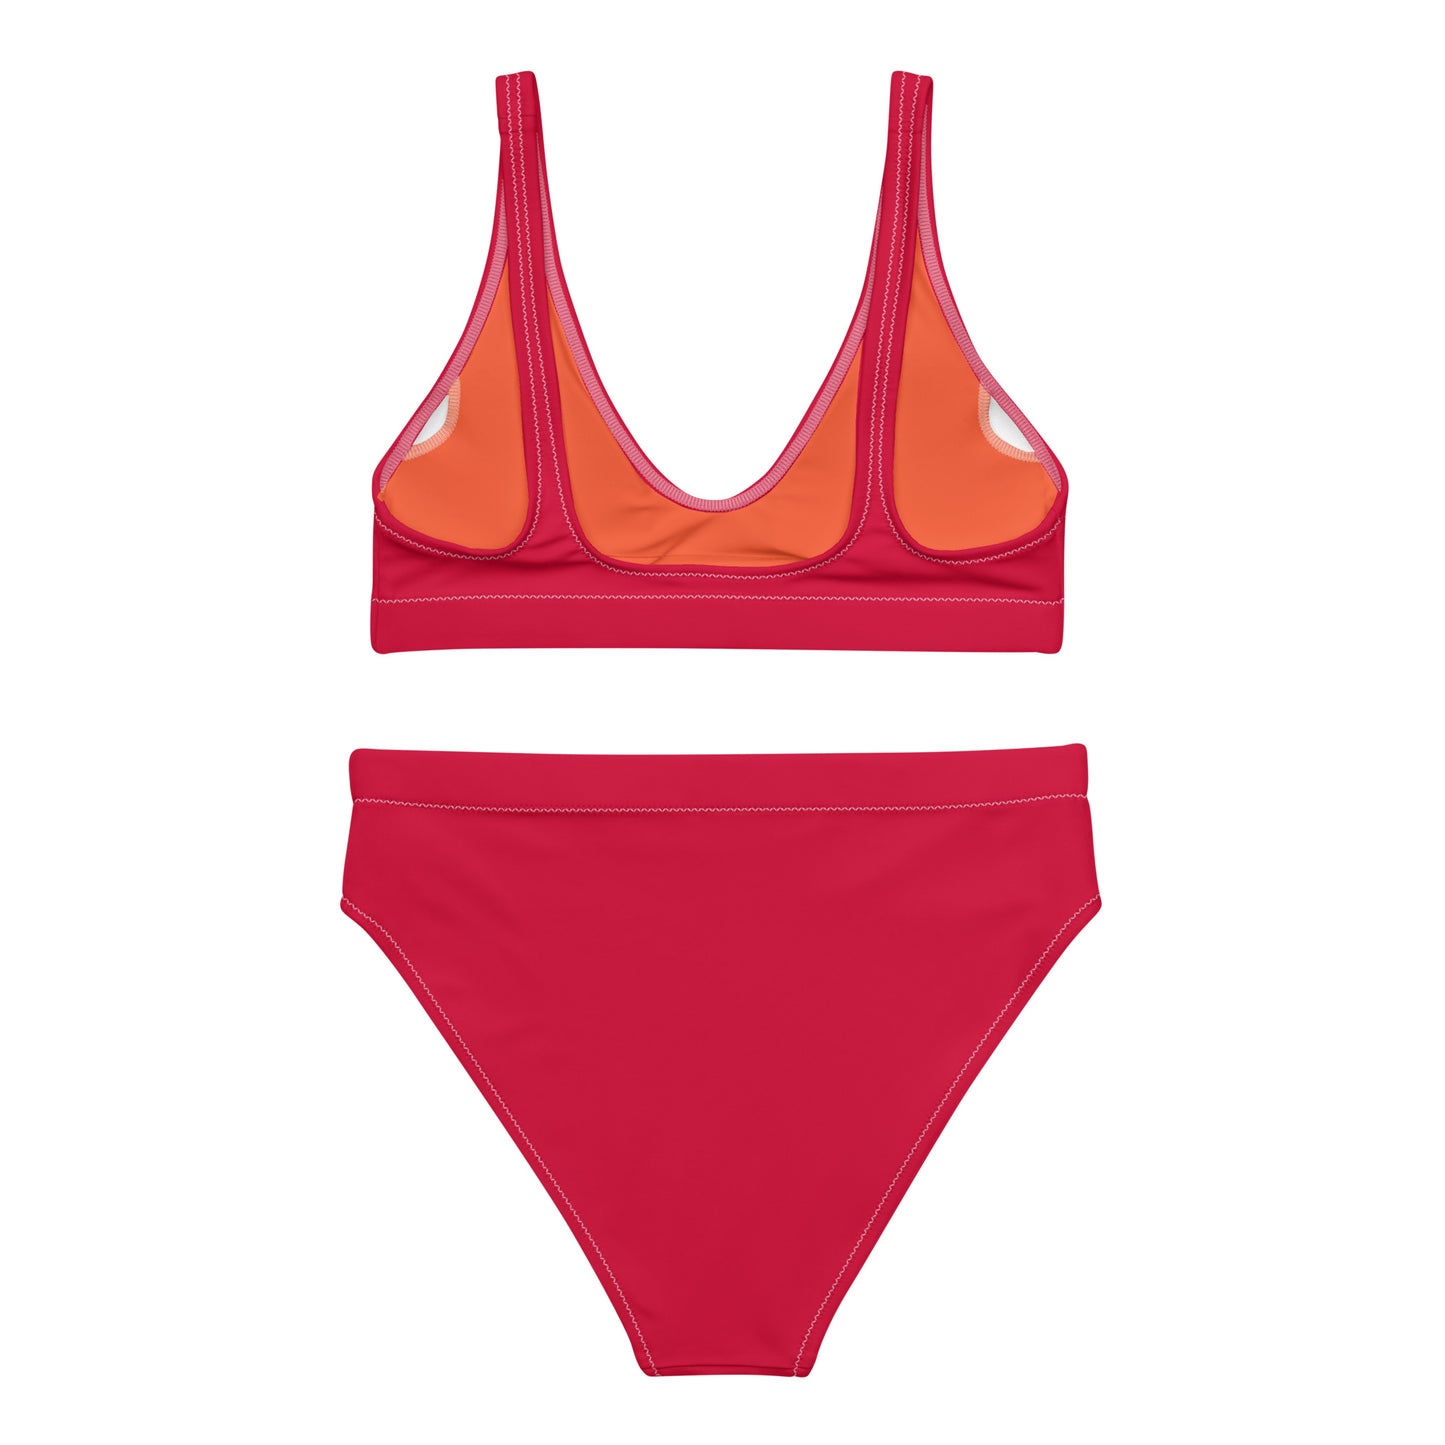 Crimson red Recycled High-waisted Sport bikini,Swimwear for Woman, two part bathing swim suit eco-fashion beachwear, plus size swim